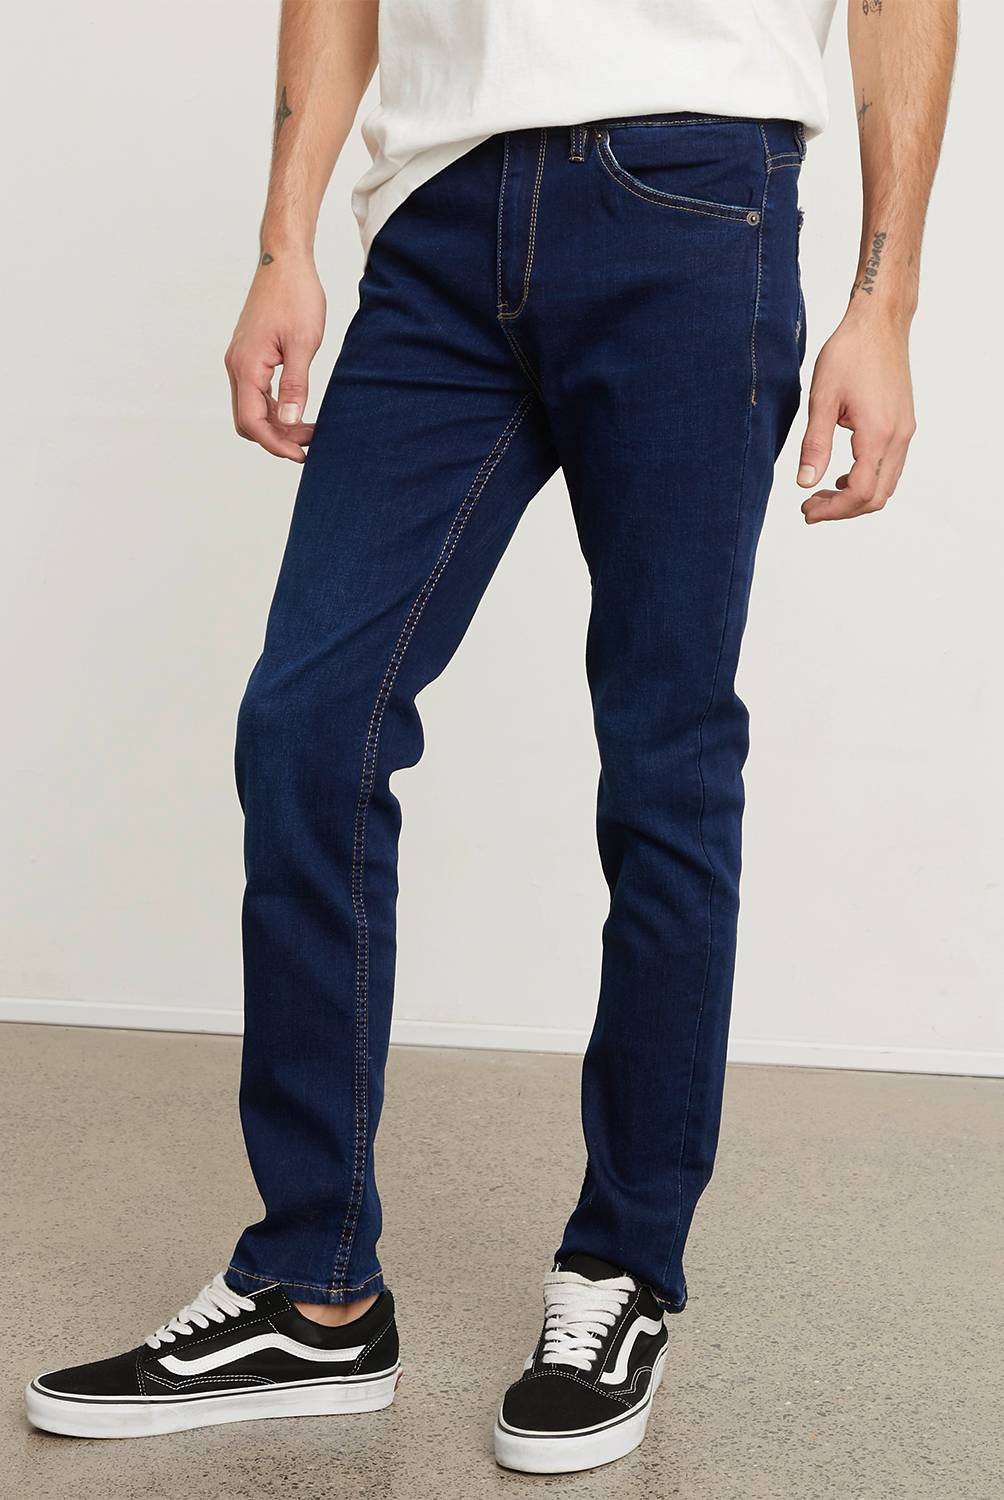 AMERICANINO - Jeans Skinny Hombre Americanino